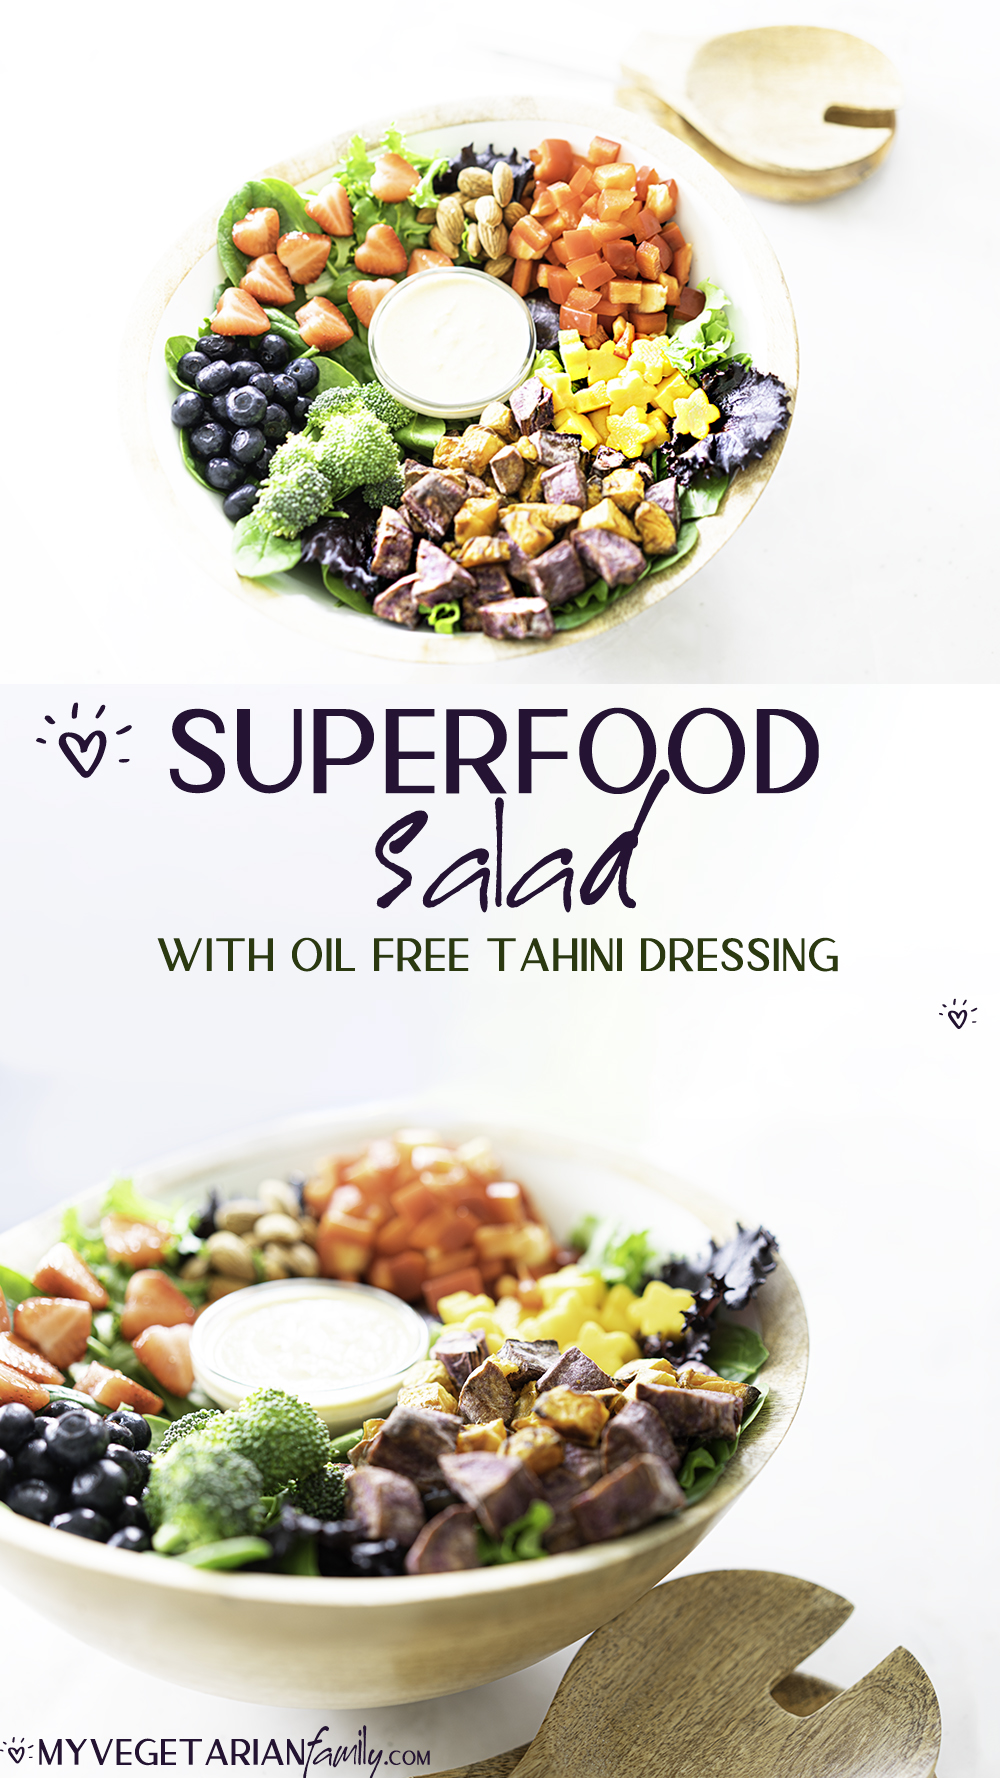 Superfood Salad with Oil Free Tahini Dressing | My Vegetarian Family #vegansalad #oilfreedressing #immunityboostingfoods